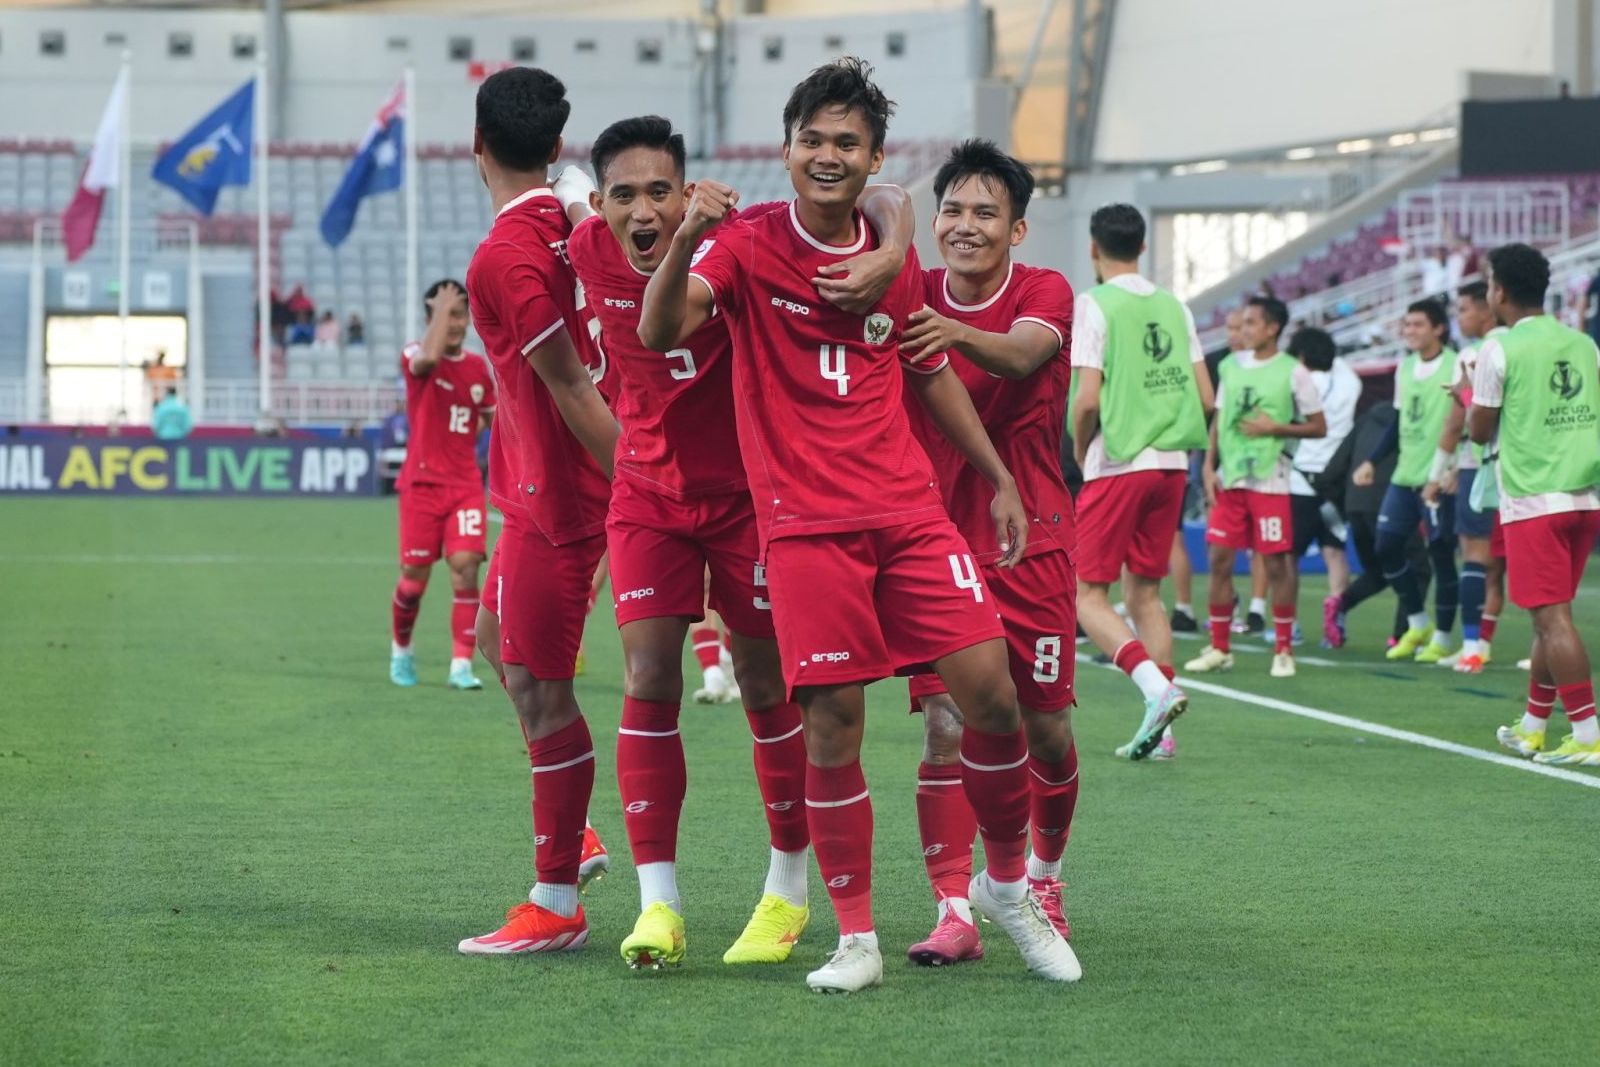 Timnas U23 Indonesia Vs Yordania: Pesan STY Jangan Lengah, Pikirkan 3 Angka